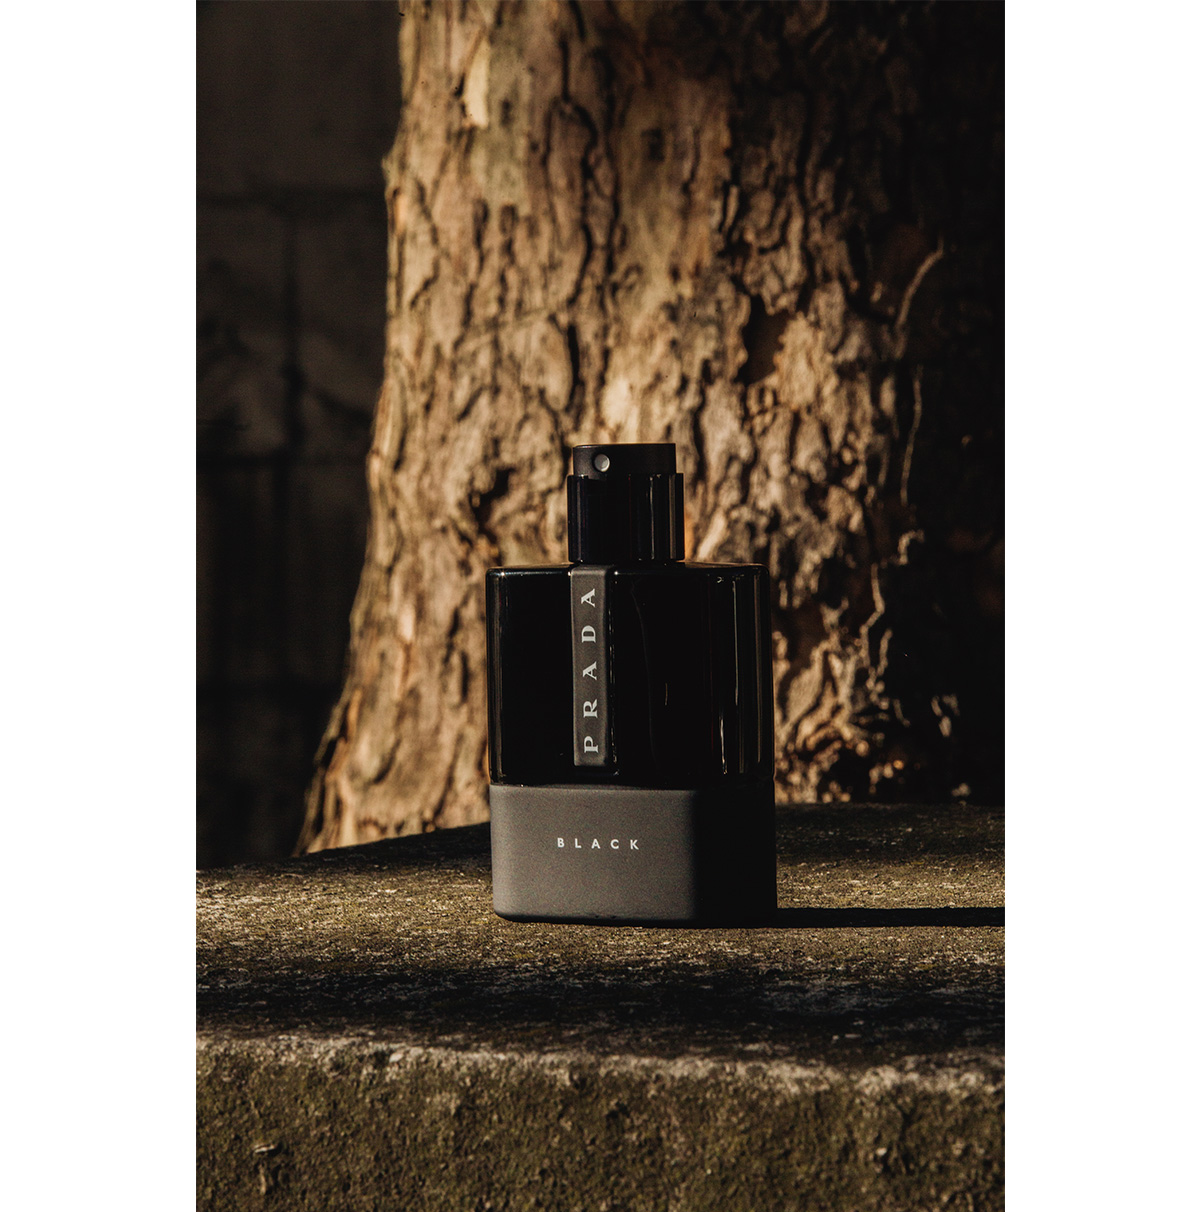 prada-black-fragrance-urban-exploration-3